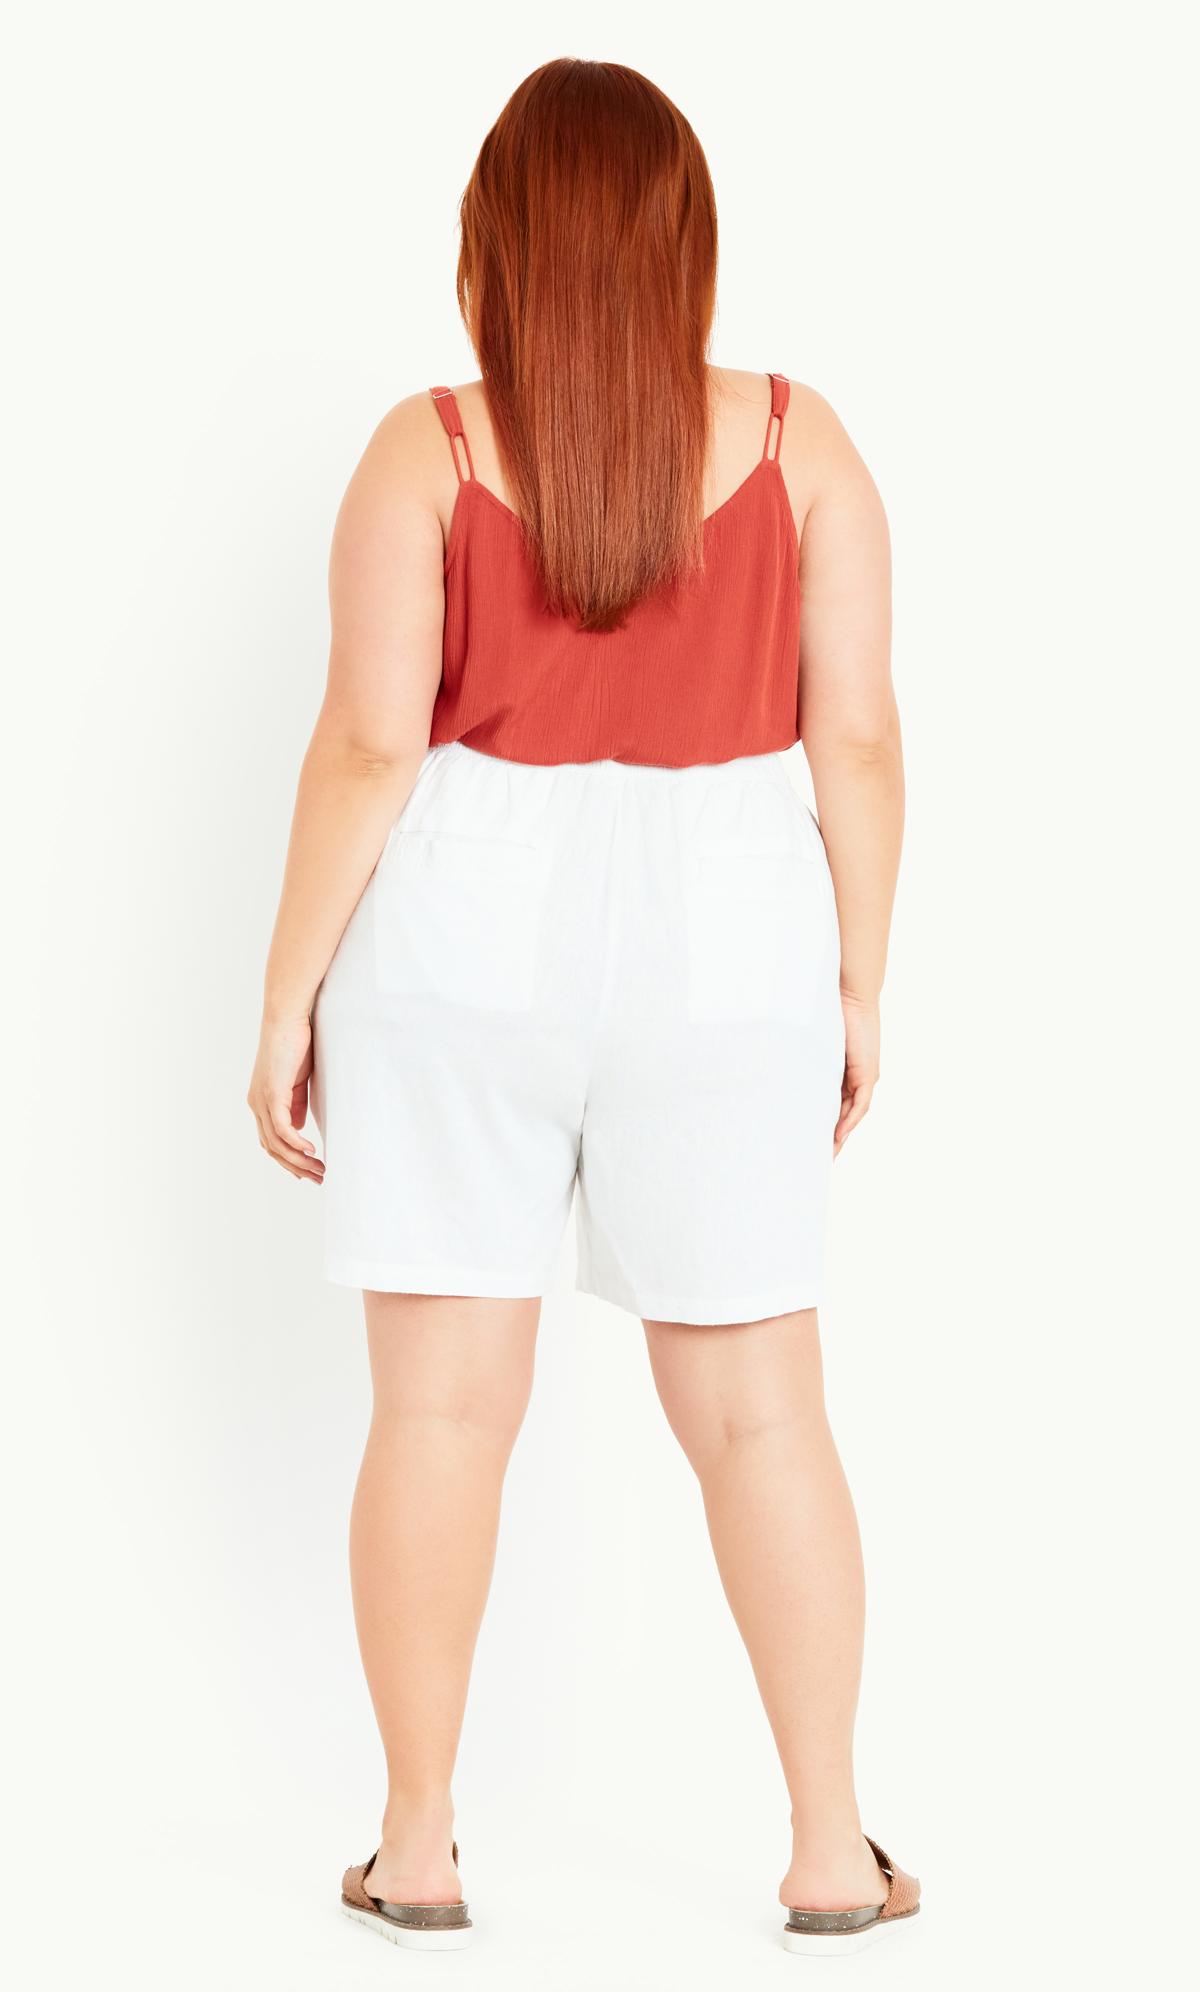 Olyvenn Womens Plus Size Shorts Linen Cute Bermuda Shorts Comfy